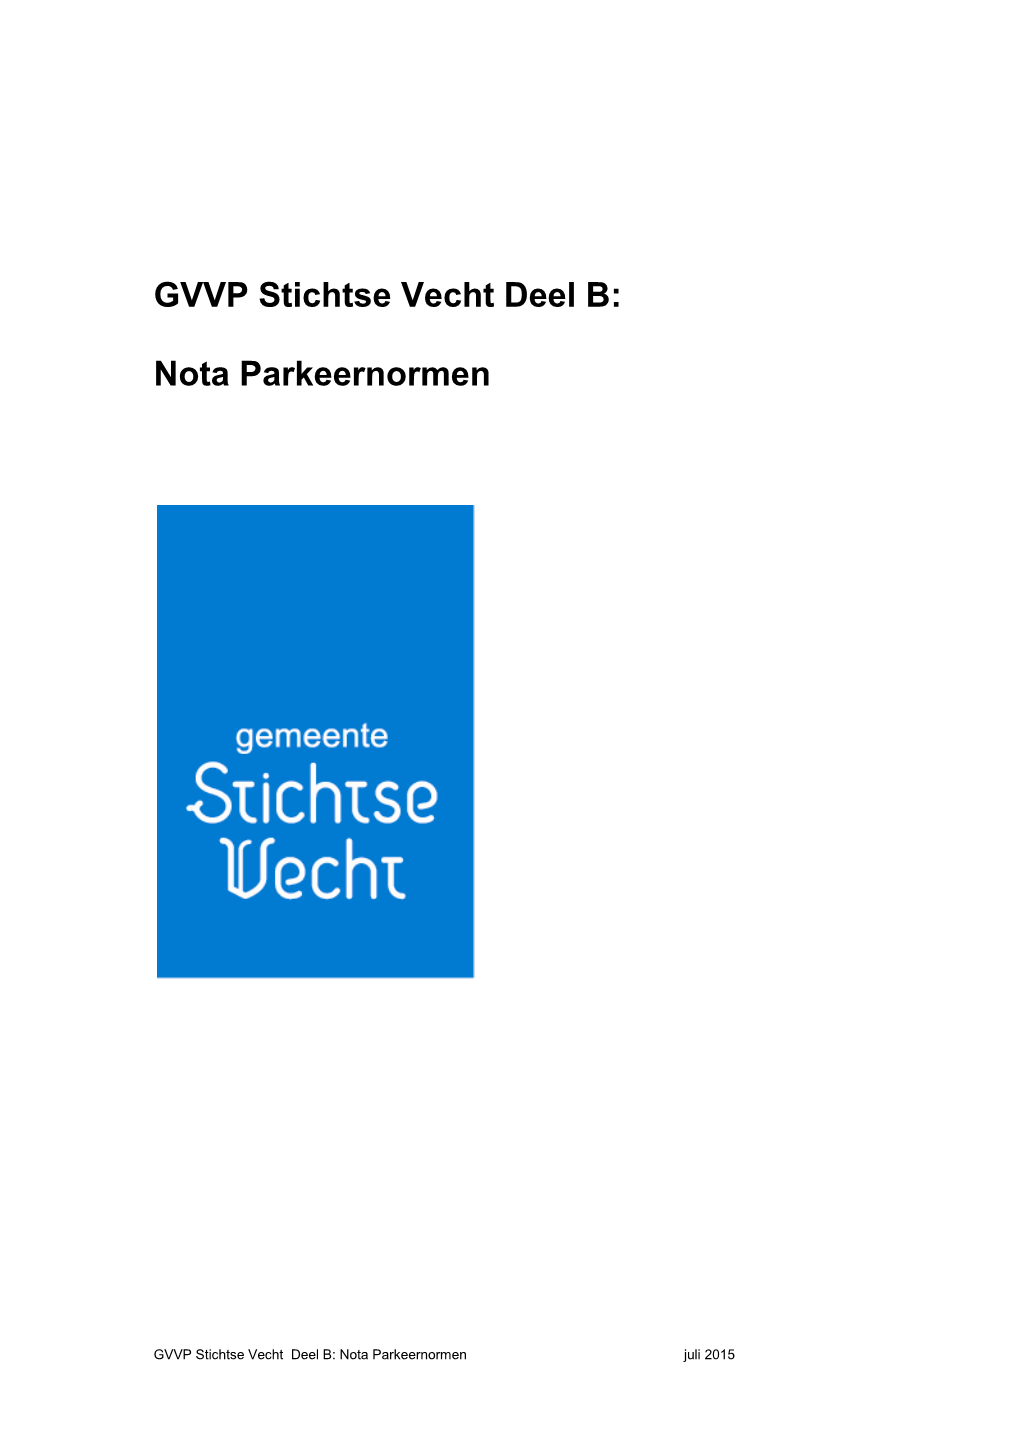 GVVP Stichtse Vecht Deel B: Nota Parkeernormen Juli 2015